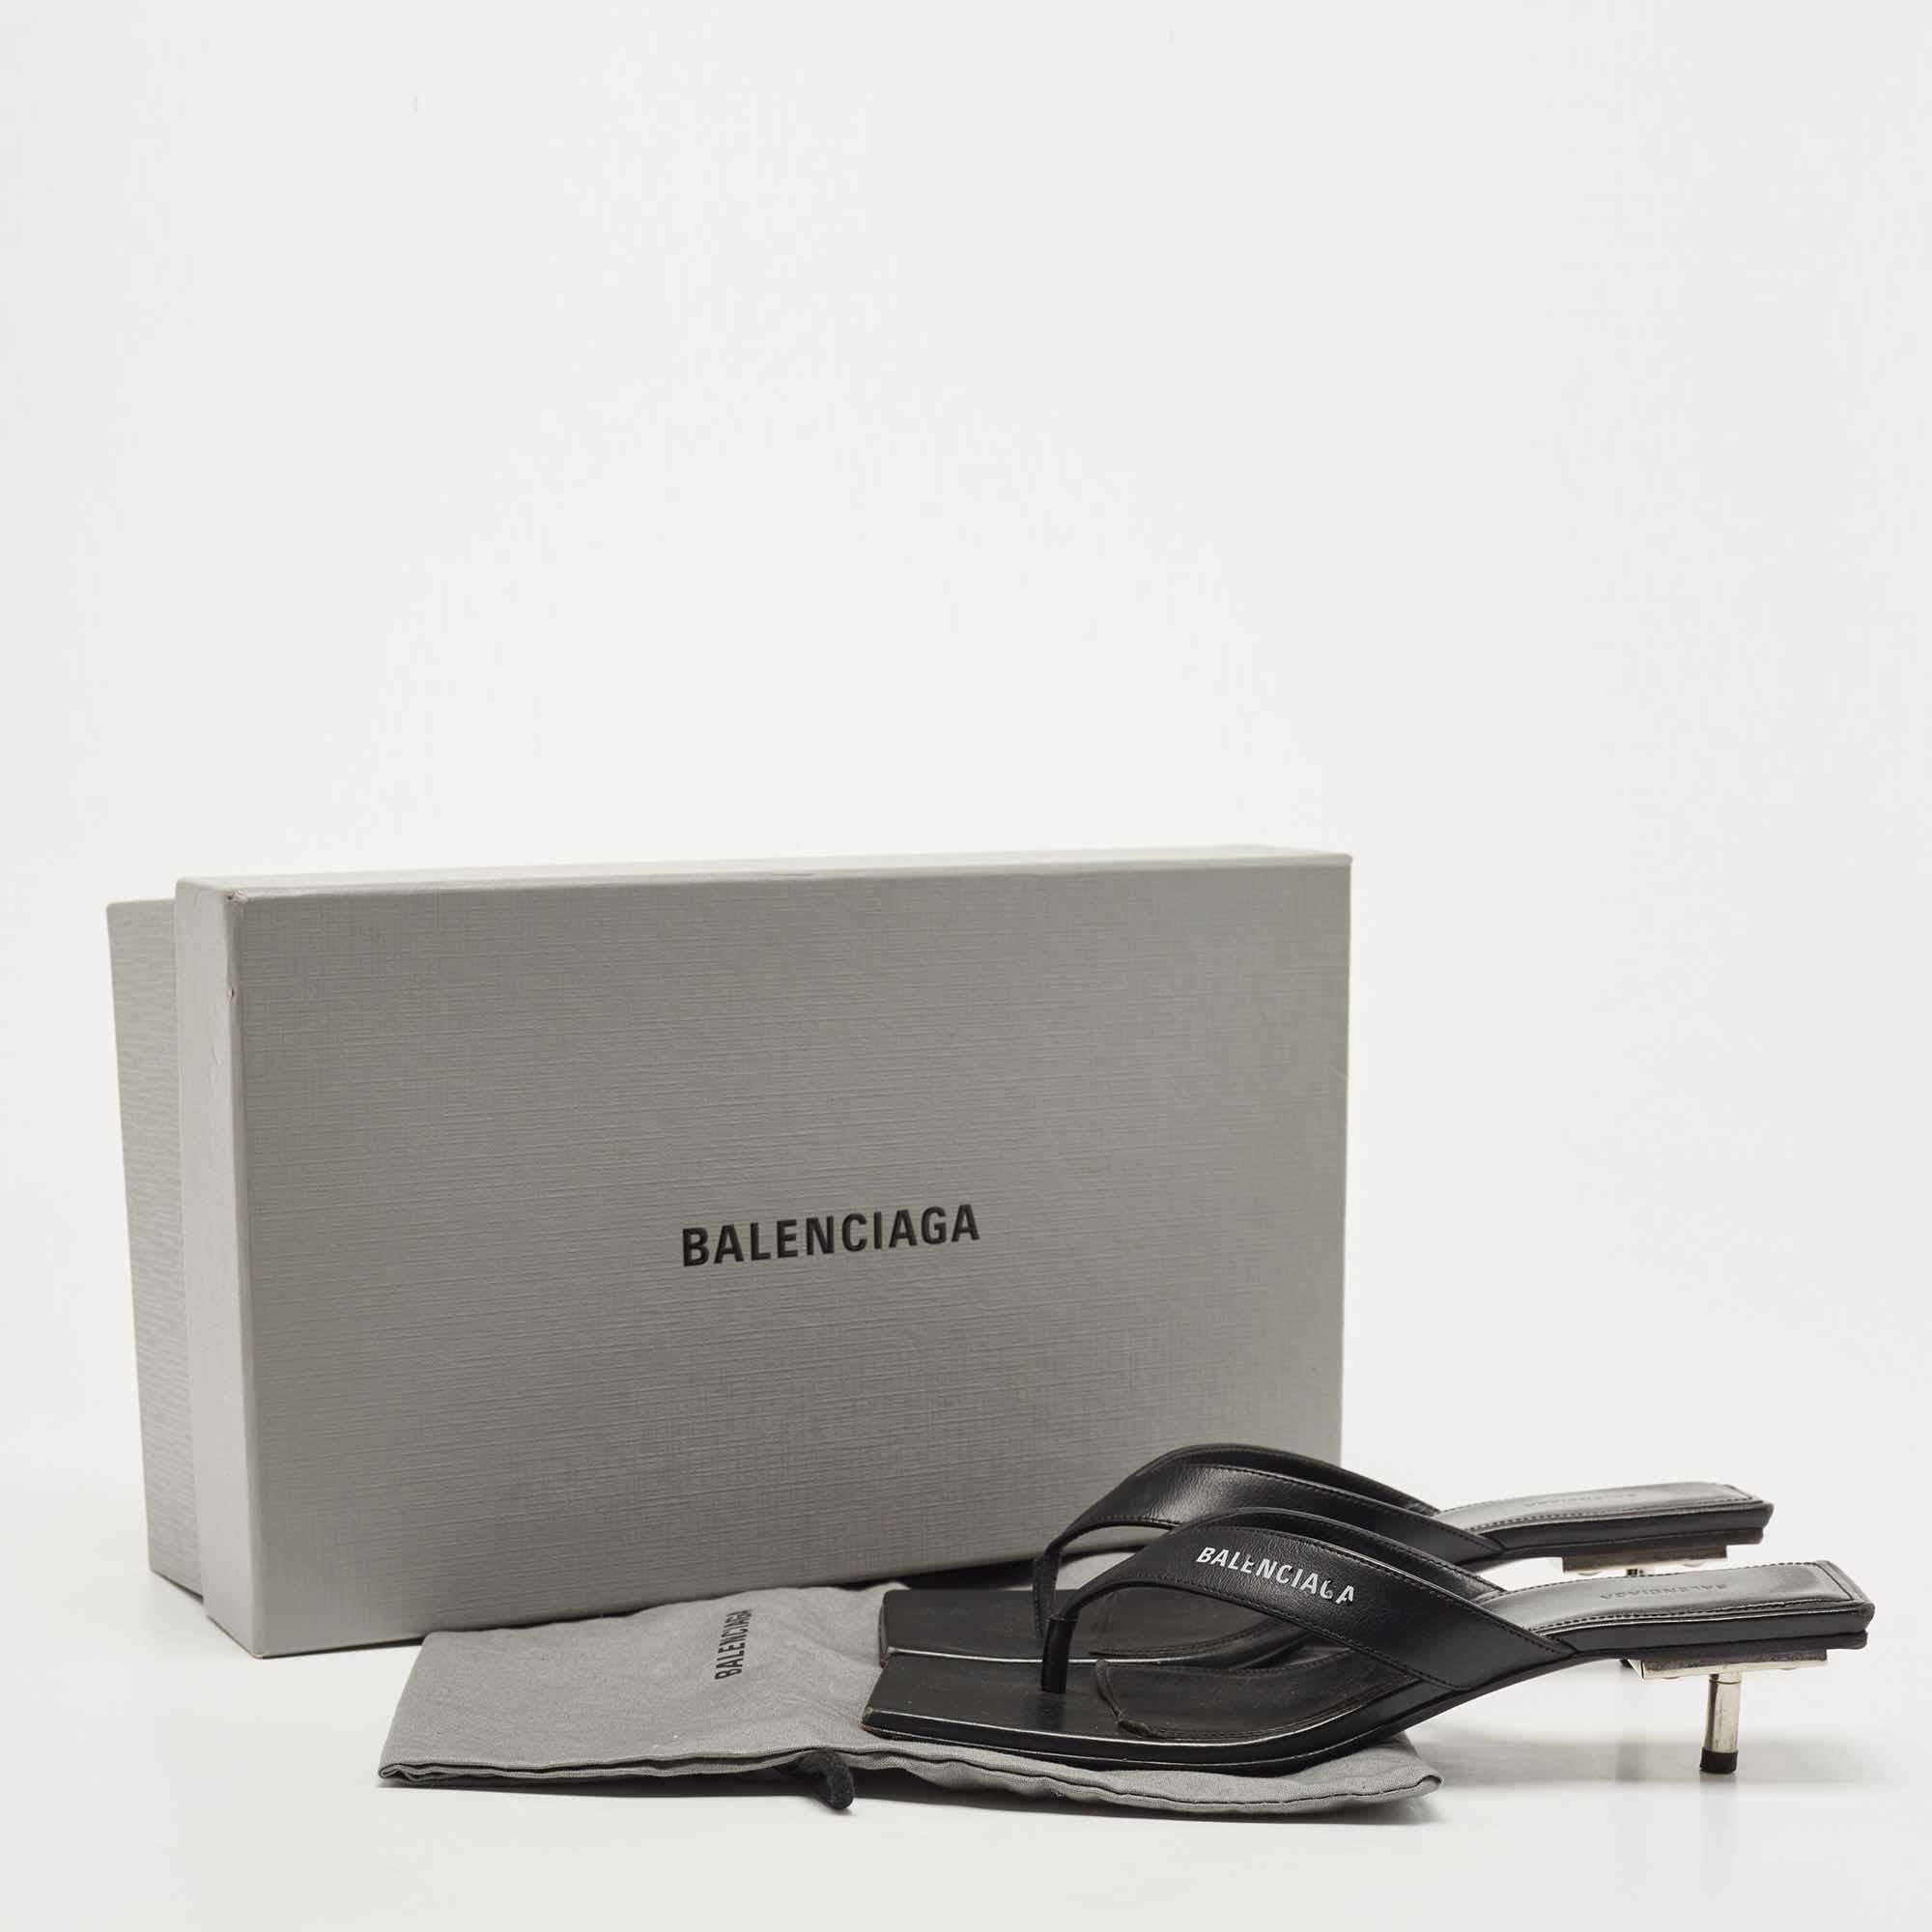 Balenciaga Black Leather Square Toe Thong Slide Sandals Size 37 5